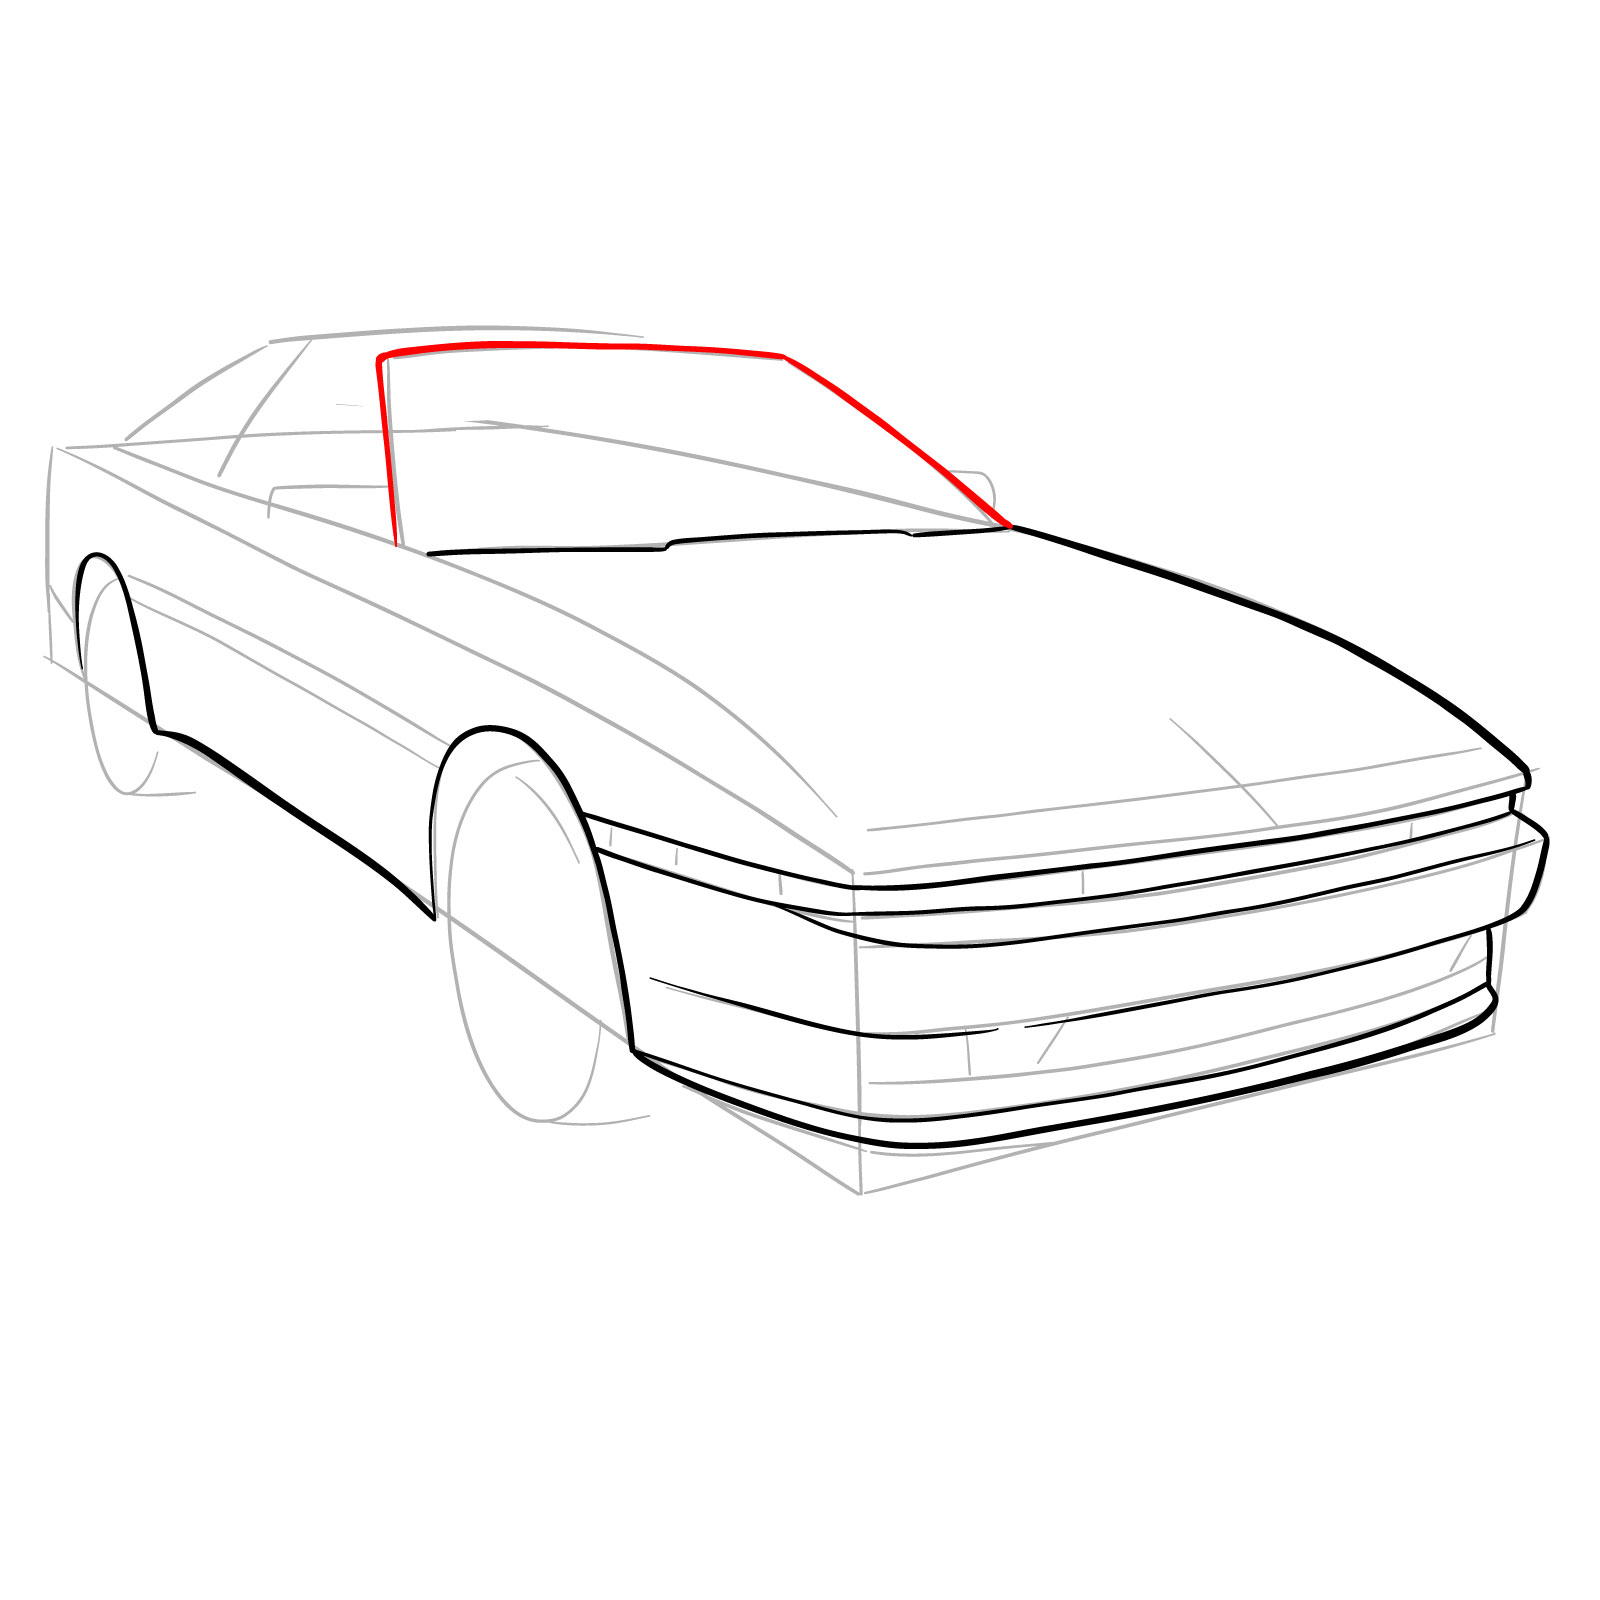 How to draw a 1988 Toyota Supra Turbo MK 3 - step 10